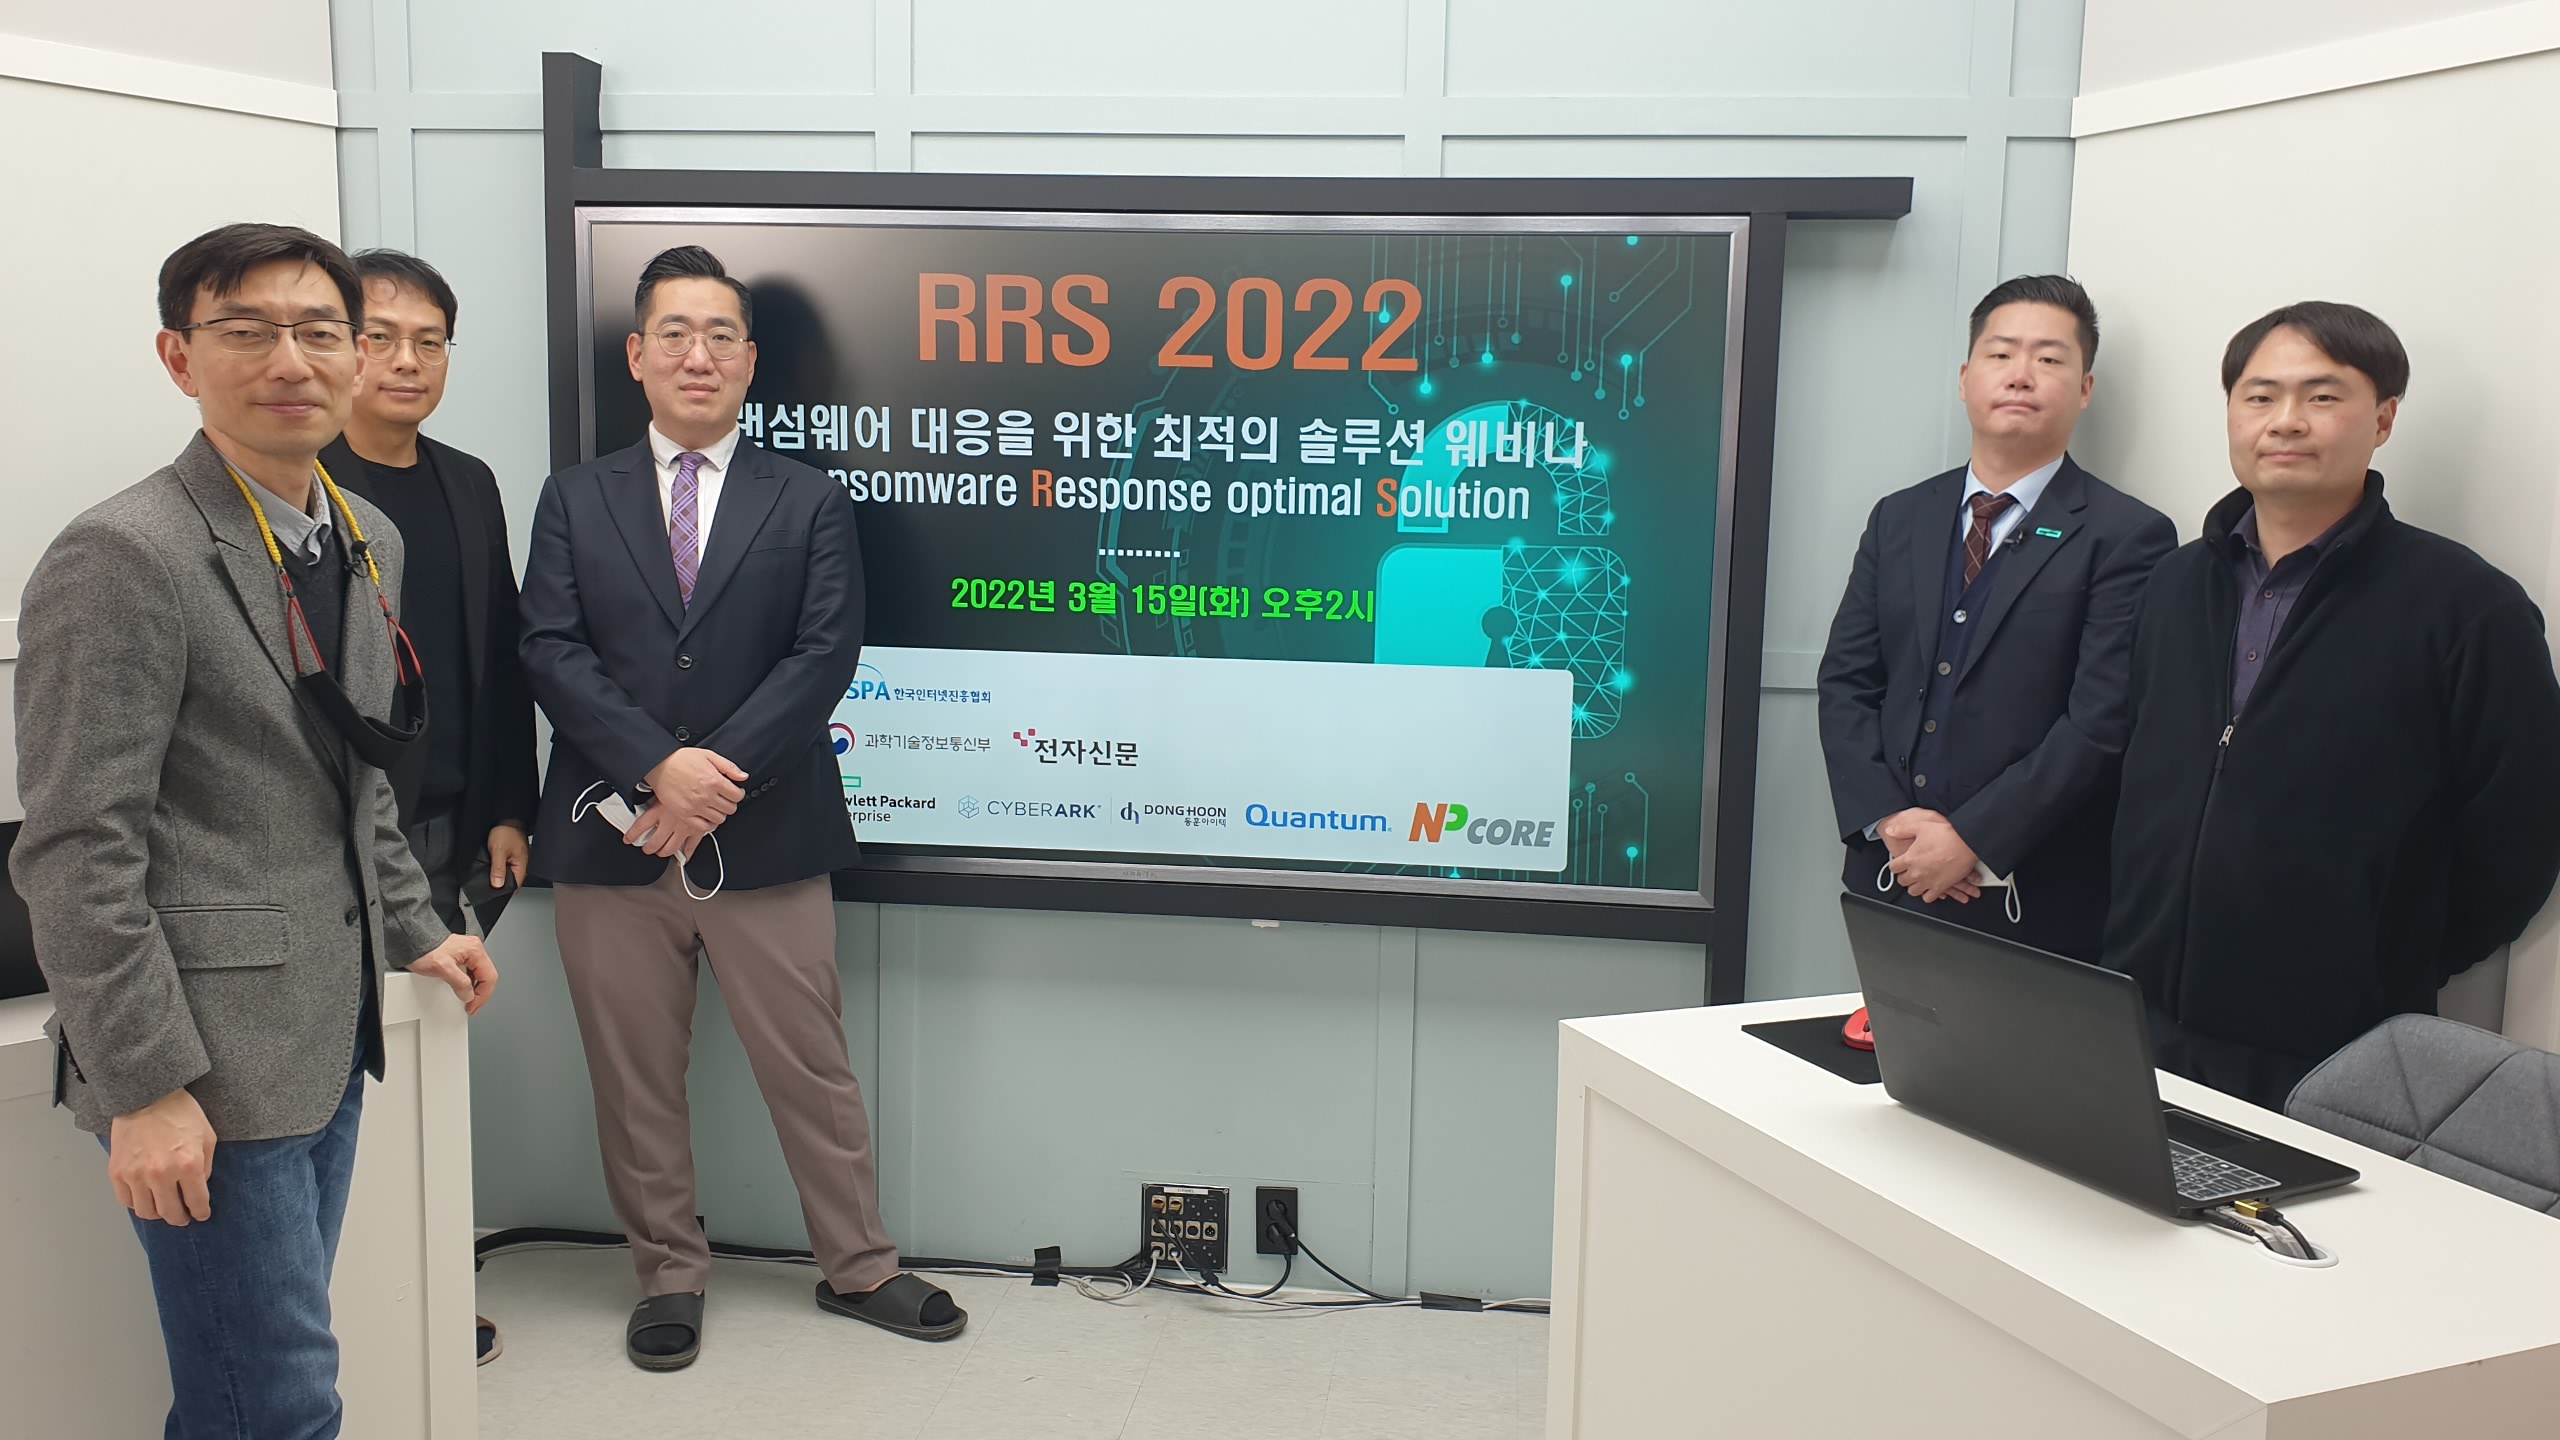 RRS 2022 웨비나 (2022.3.15) -  솔루션 웨비나-랜섬웨어 대응을 위한 최적의 솔루션 웨비나 